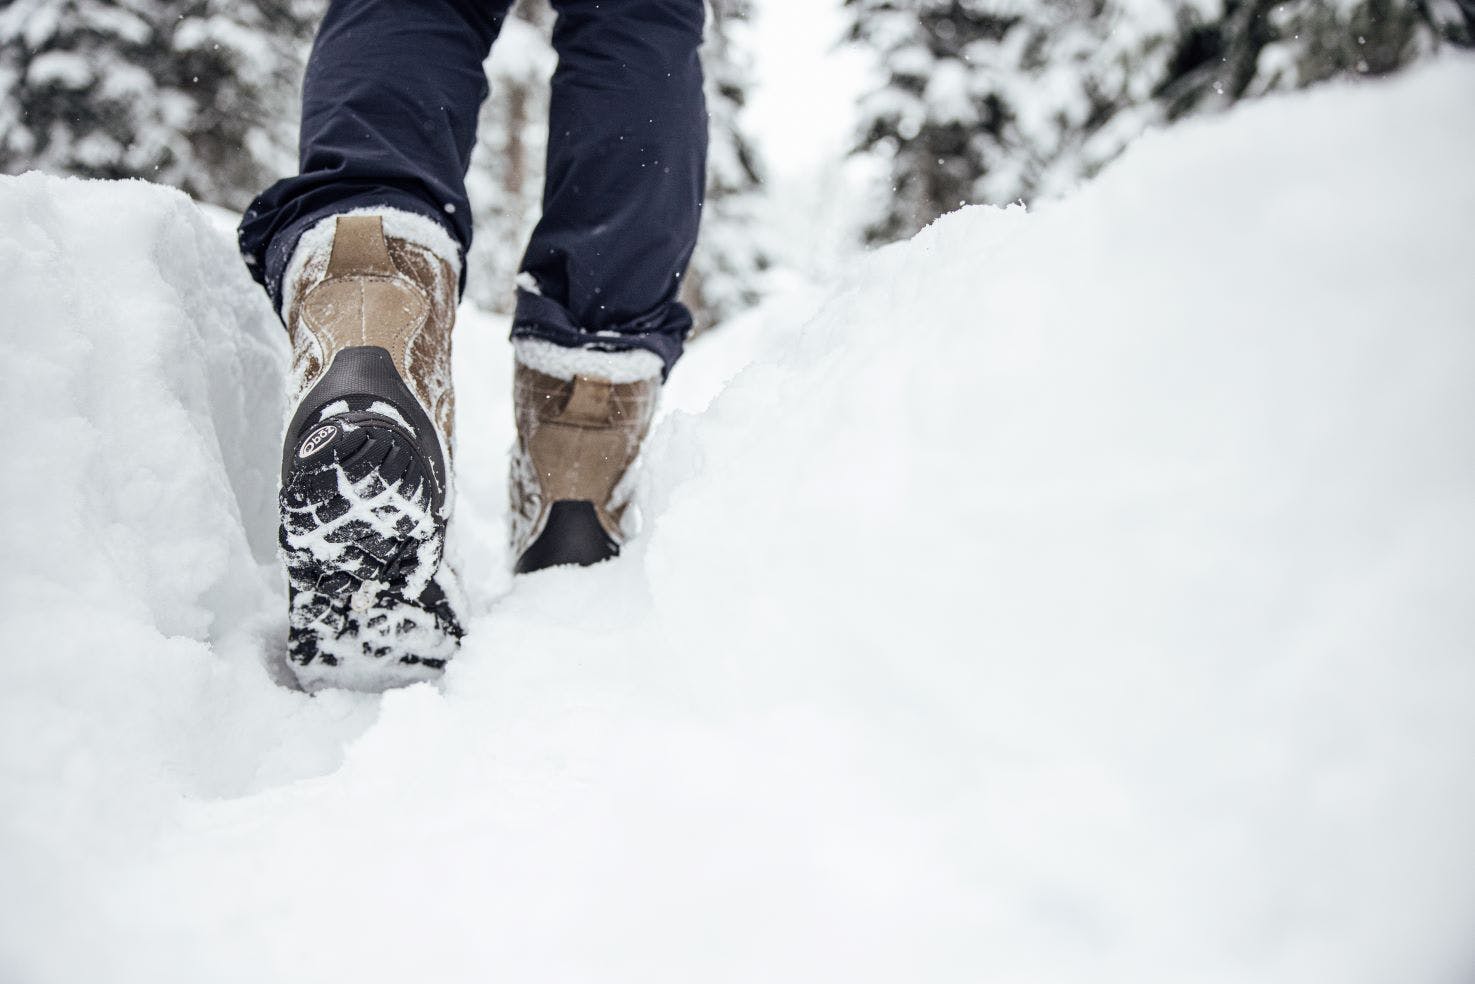 Oboz Bridger insualted hiking boot walking through snow.